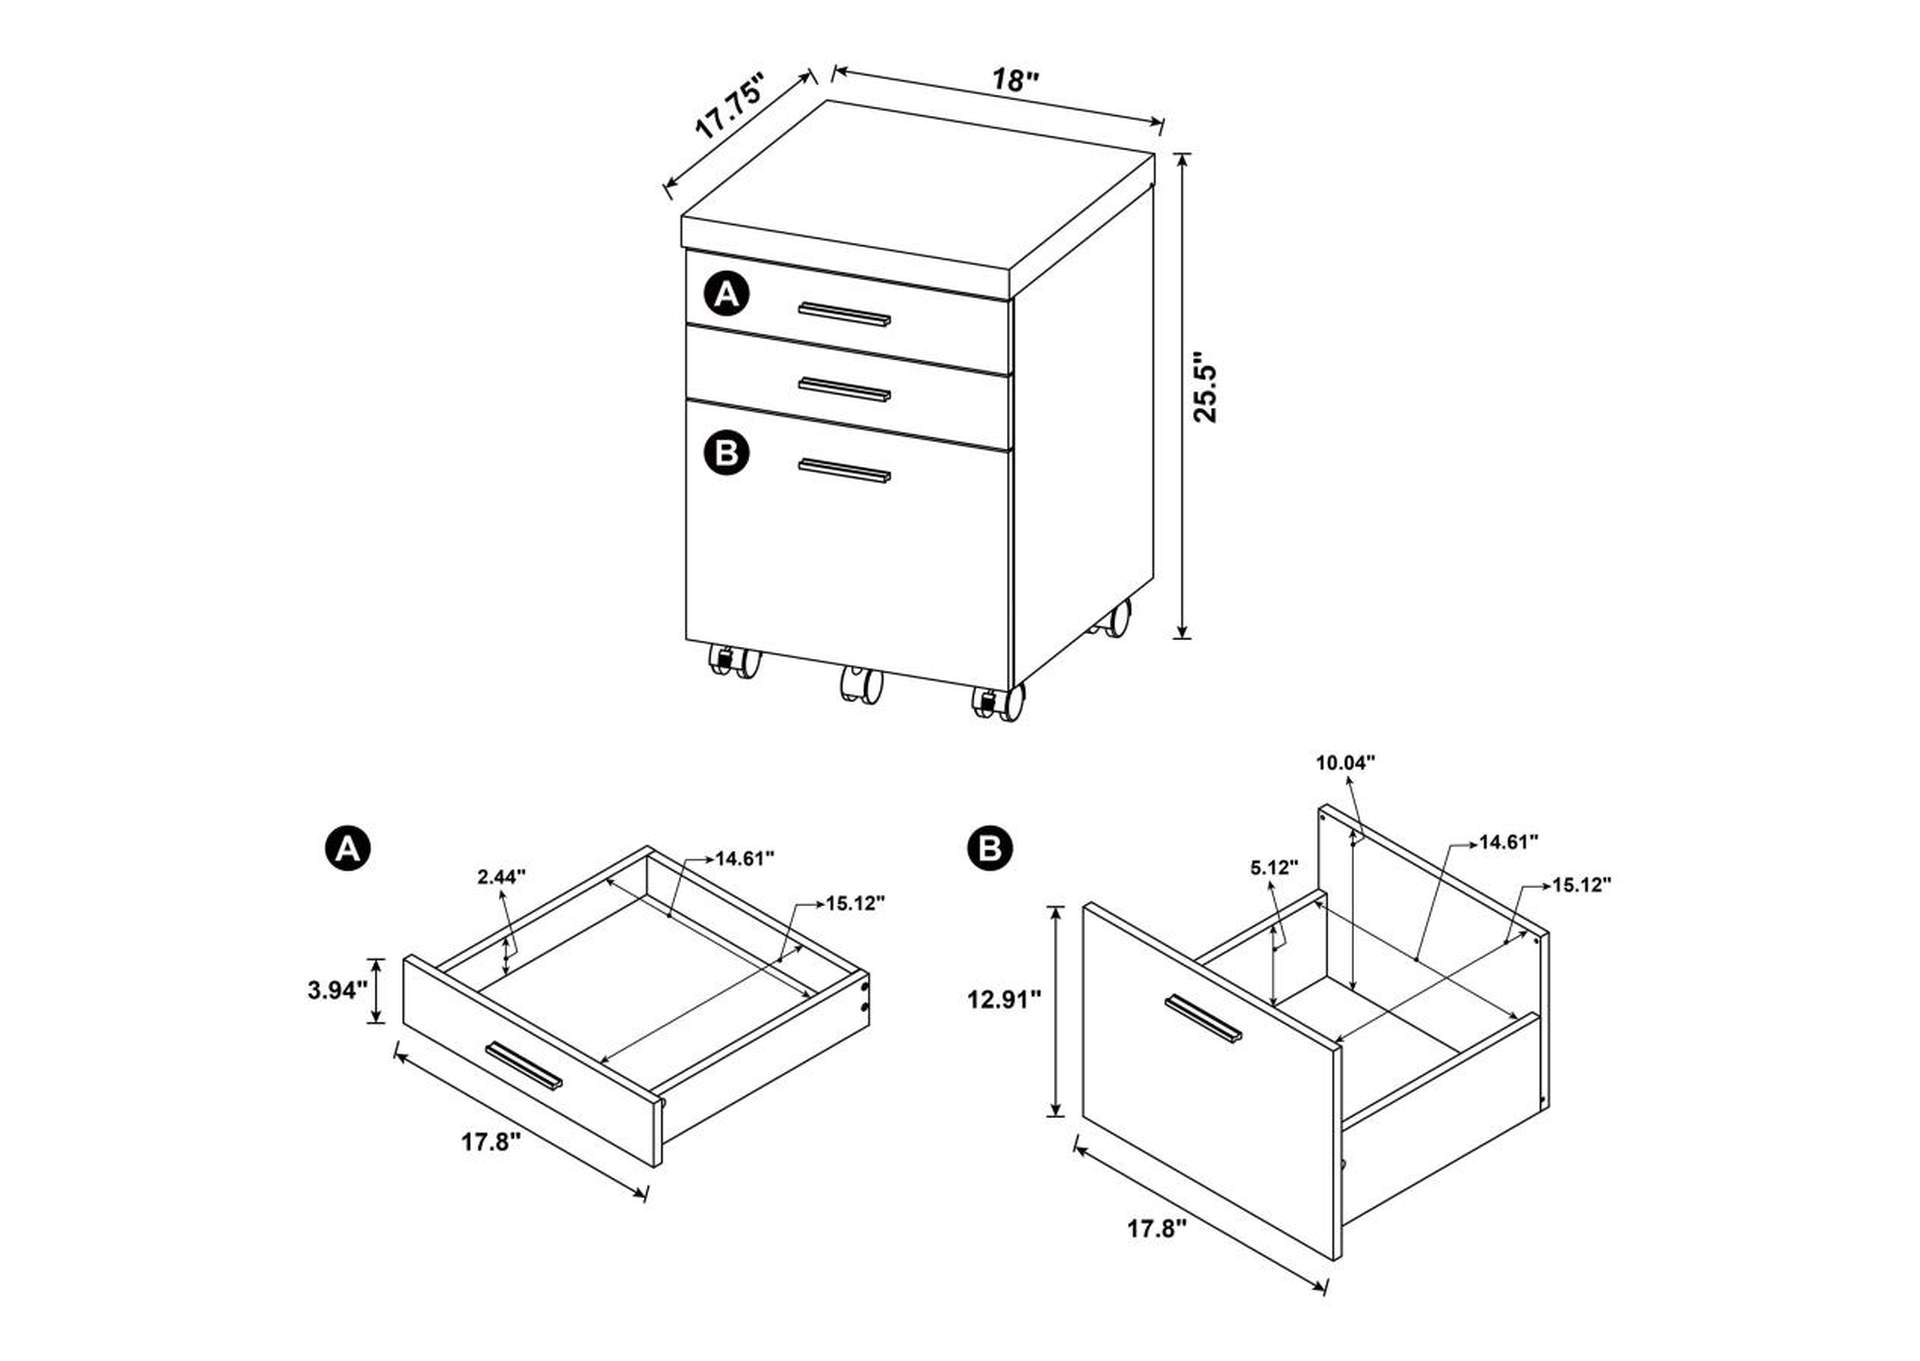 Skylar 3 - drawer Mobile File Cabinet Cappuccino,Coaster Furniture